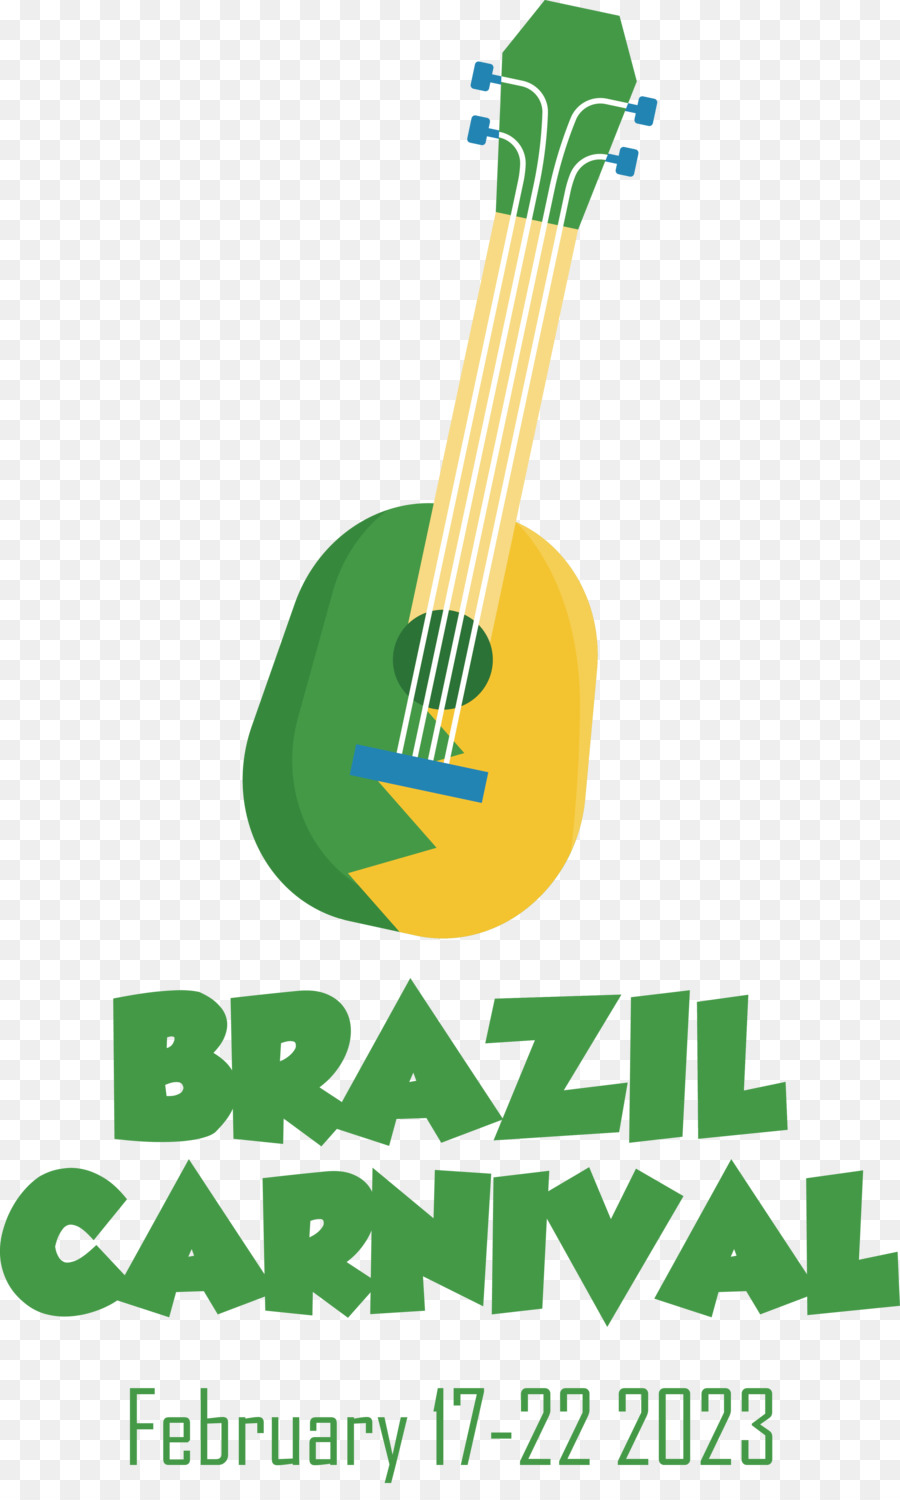 happy brazilian carnival brazilian carnival